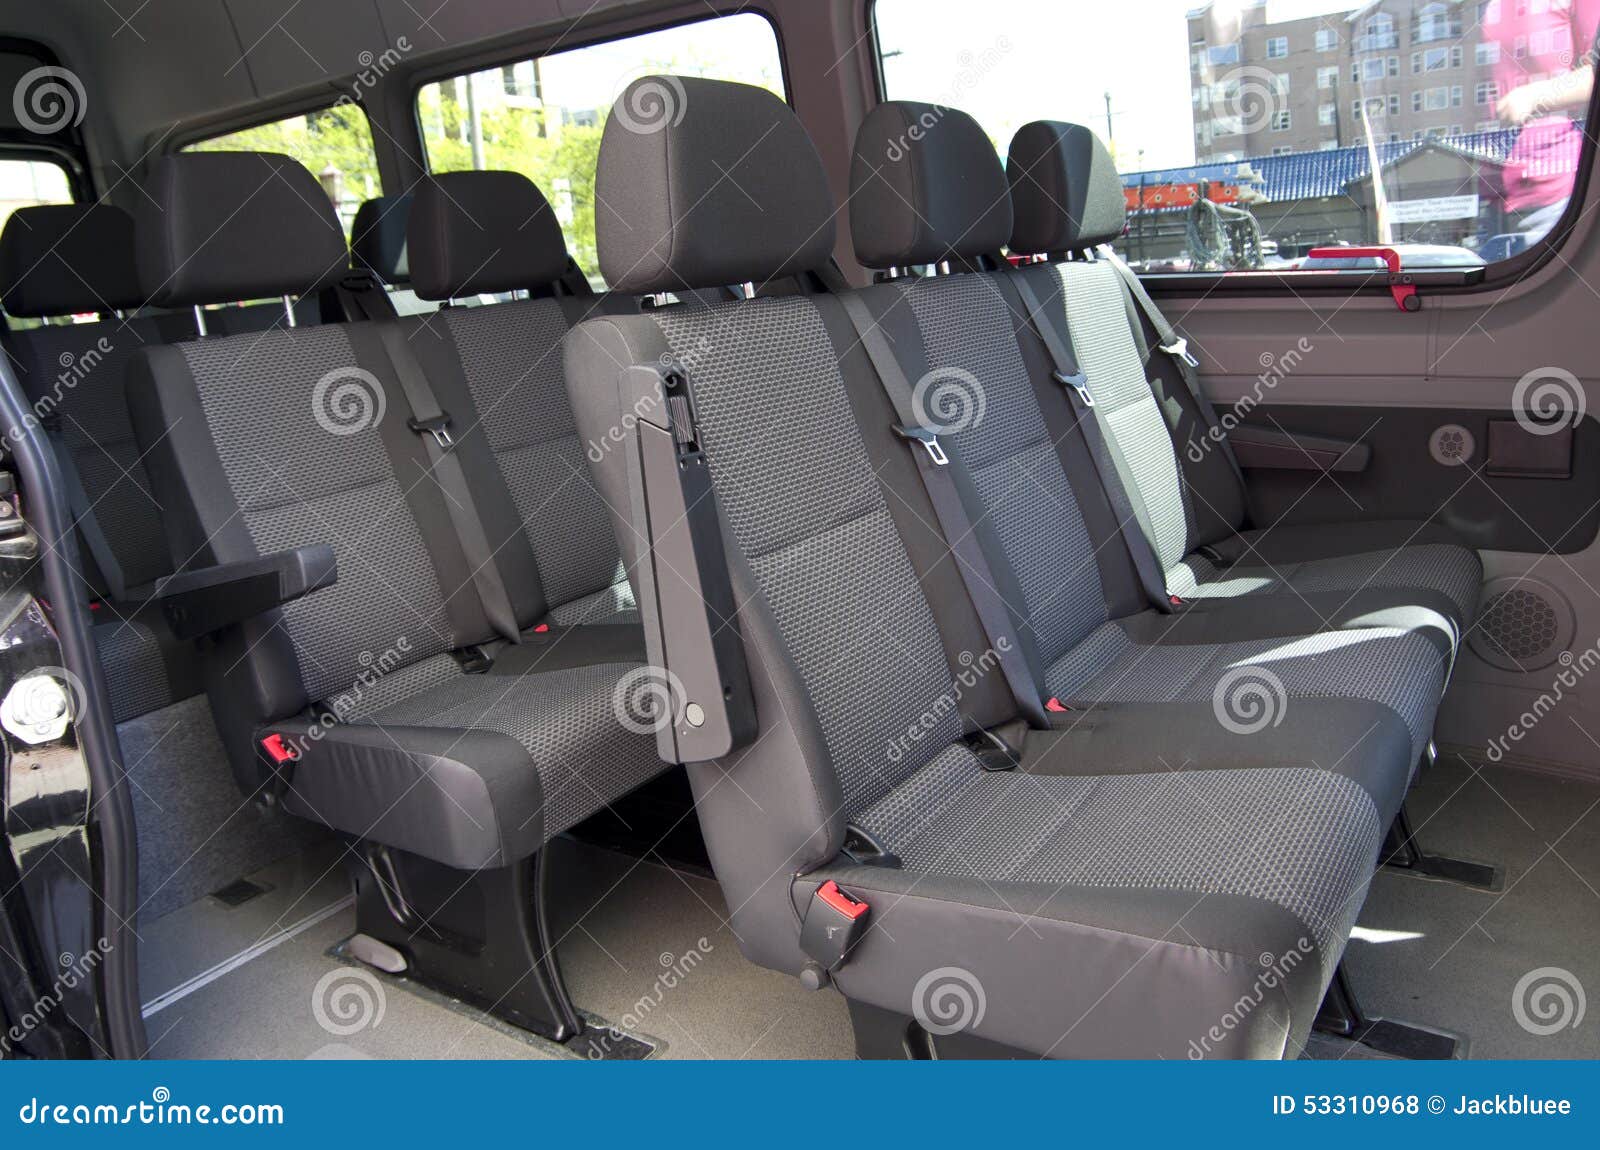 cosecha Gaviota Sympton Big passenger van stock photo. Image of mercedes, interior - 53310968